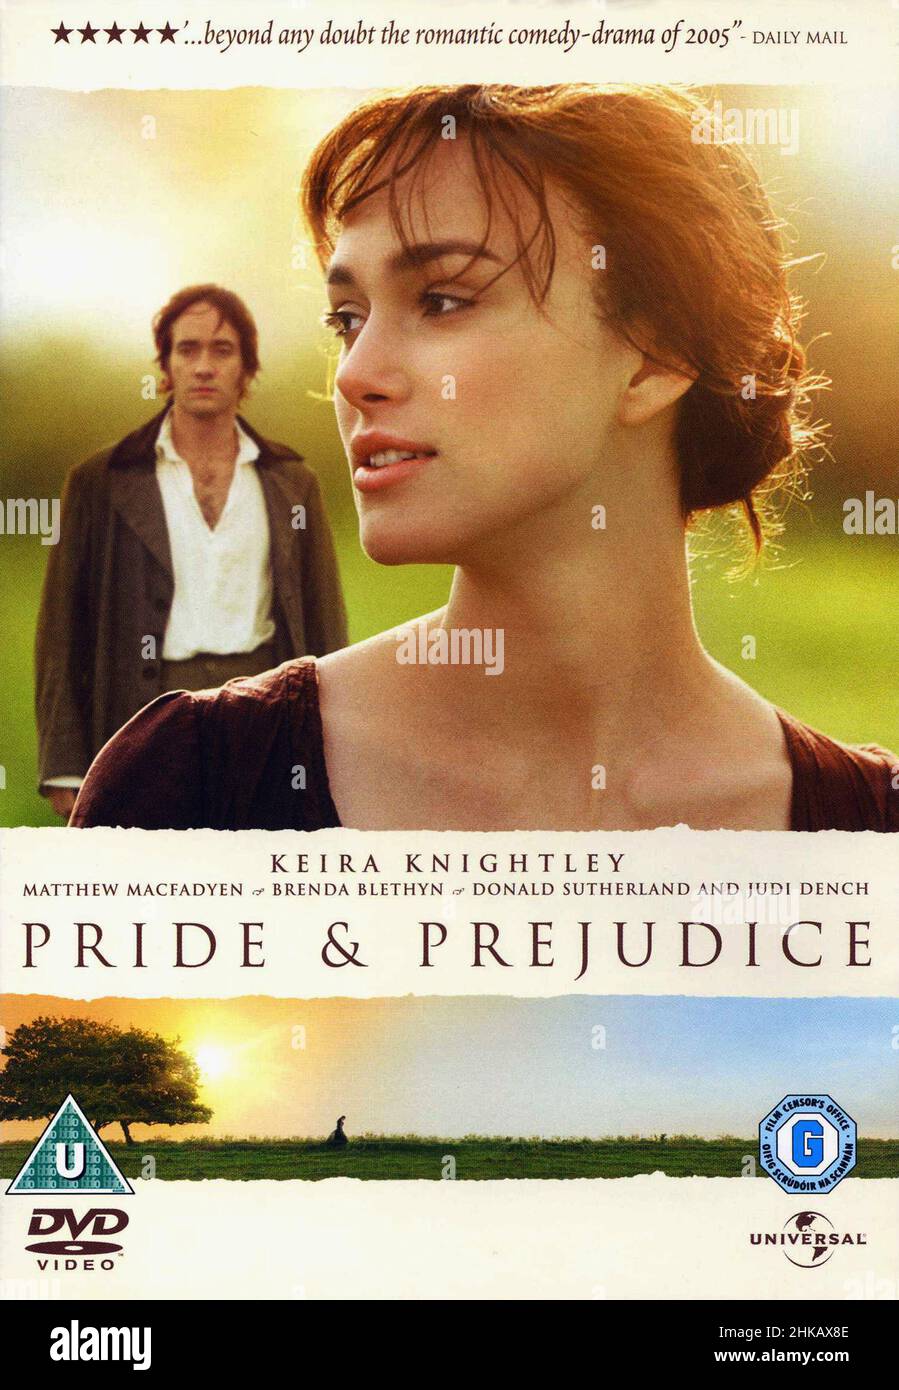 DVD Cover. 'Pride and Prejudice by Jane Austen. Stock Photo